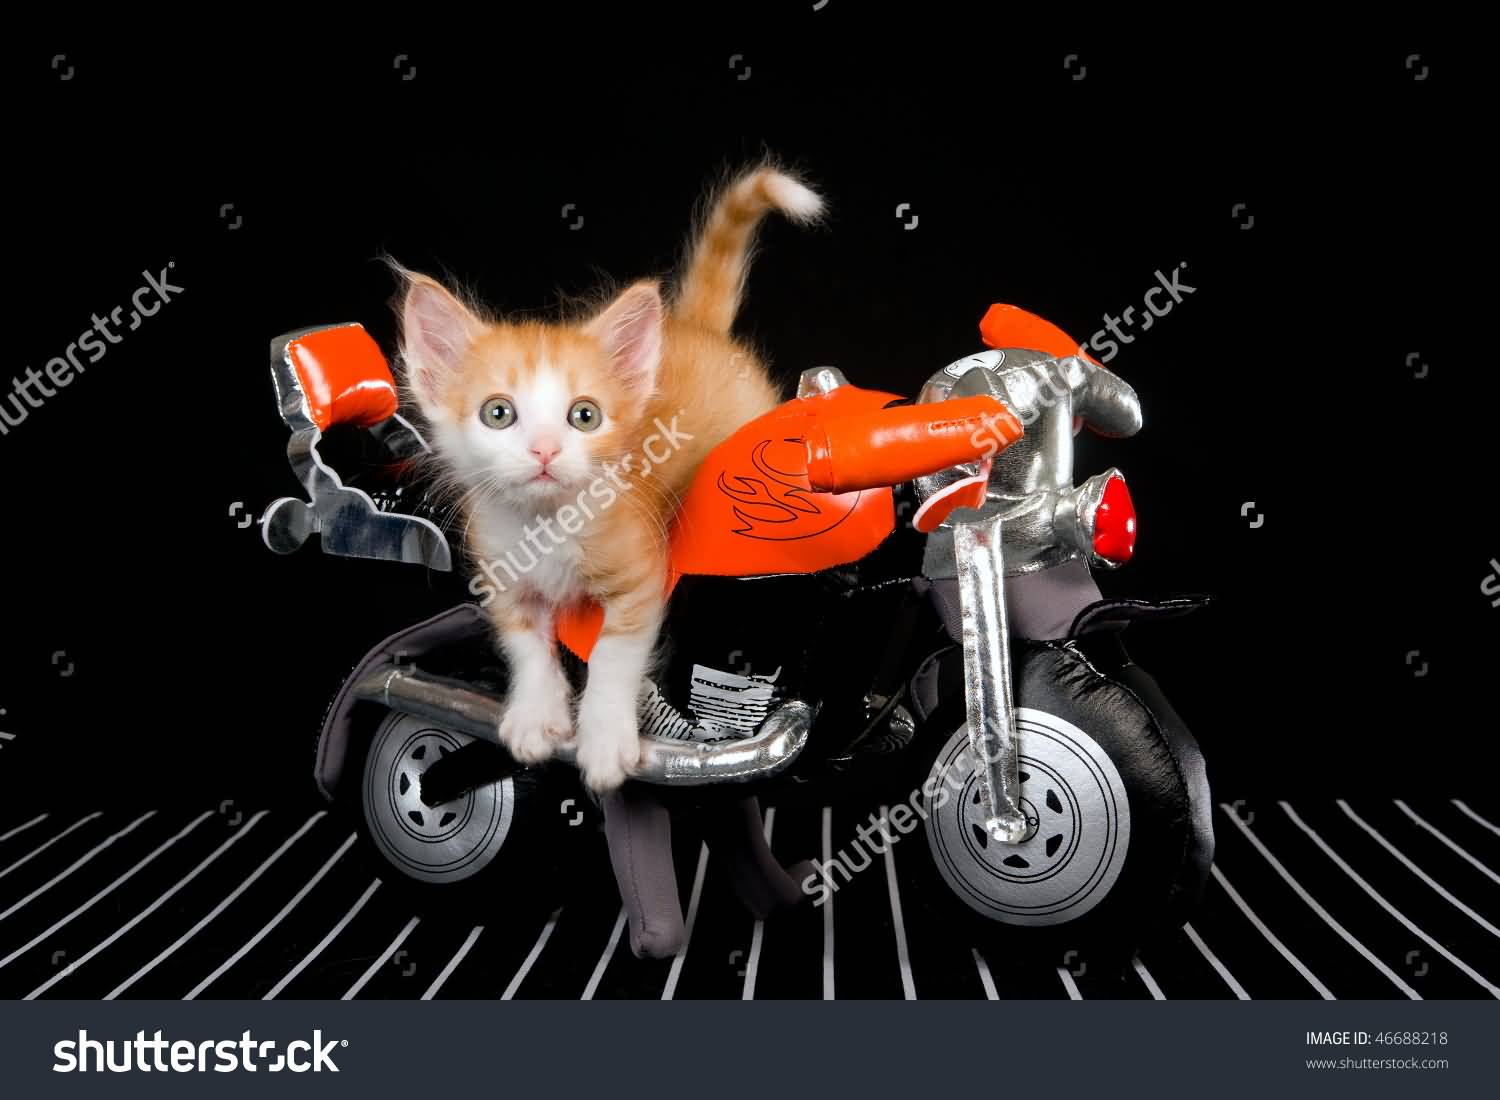 Laperm Kitten On Soft Toy Motorbike Posing For Photo